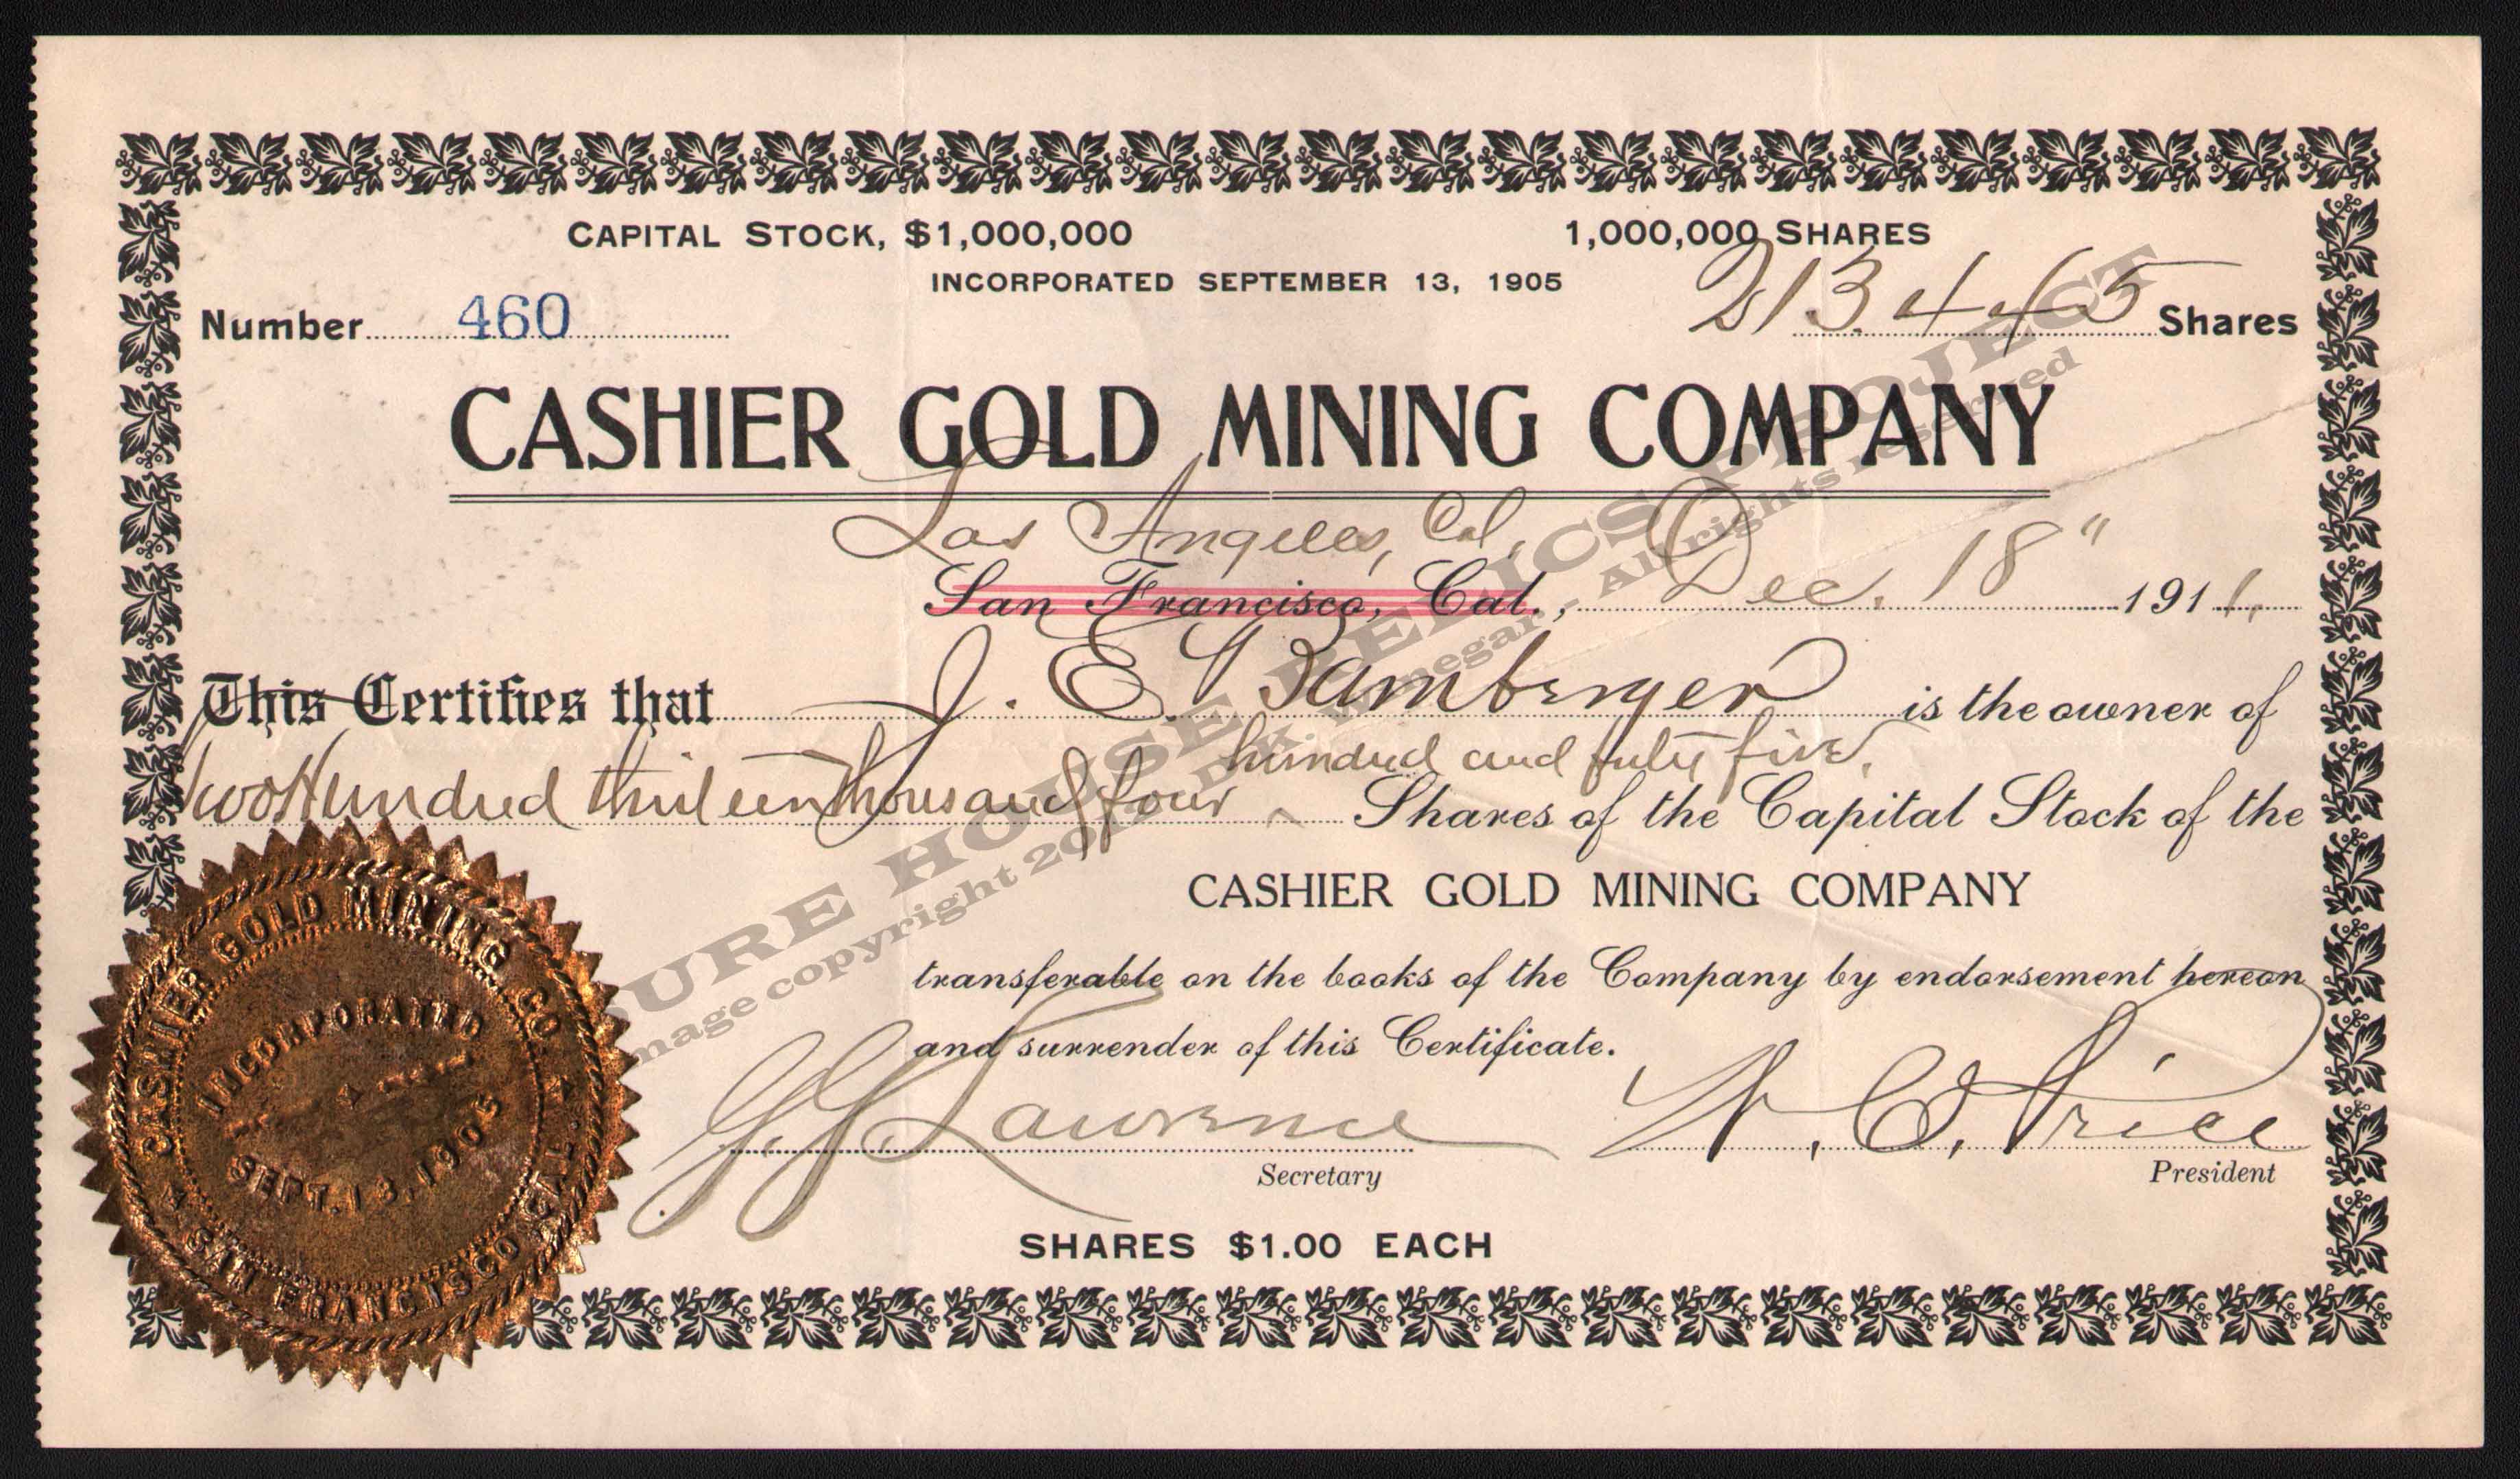 LETTERHEAD/STOCK_CASHIER_GOLD_MINING_COMPANY_460_1911_400_CROP_EMBOSS.jpg